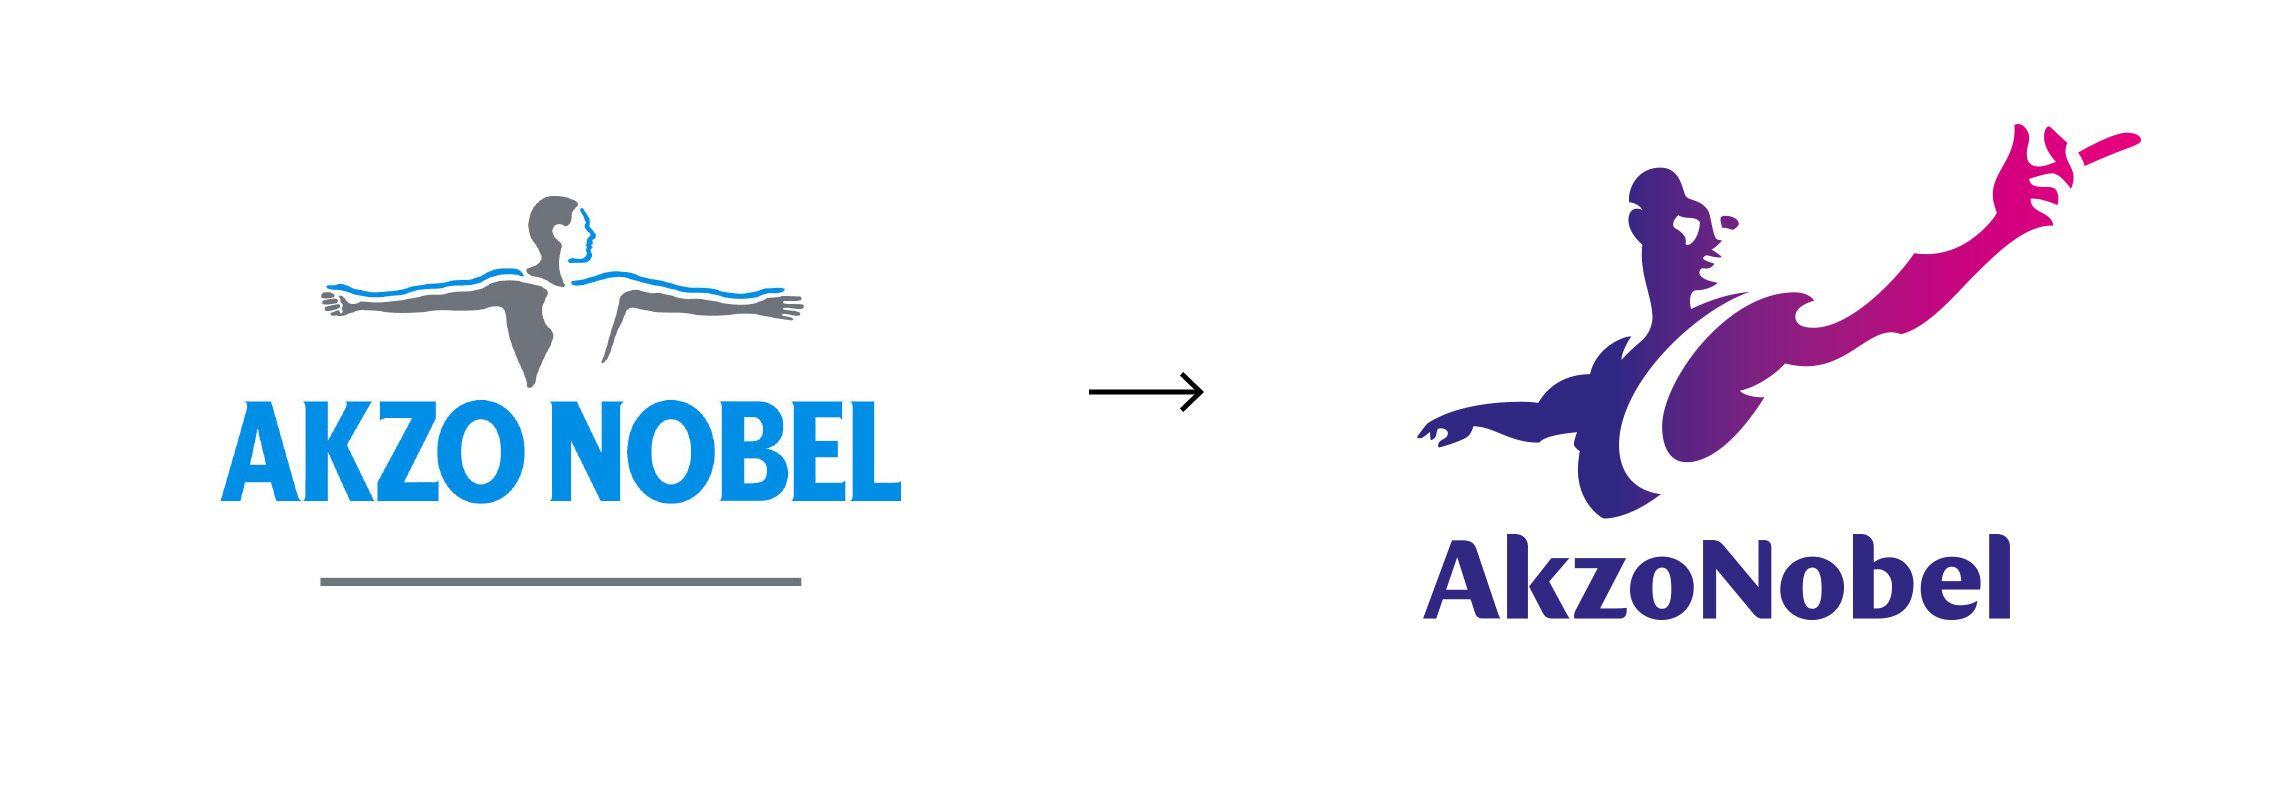 Akzonobel Logo - Akzo Nobel - Saffron Brand Consultants